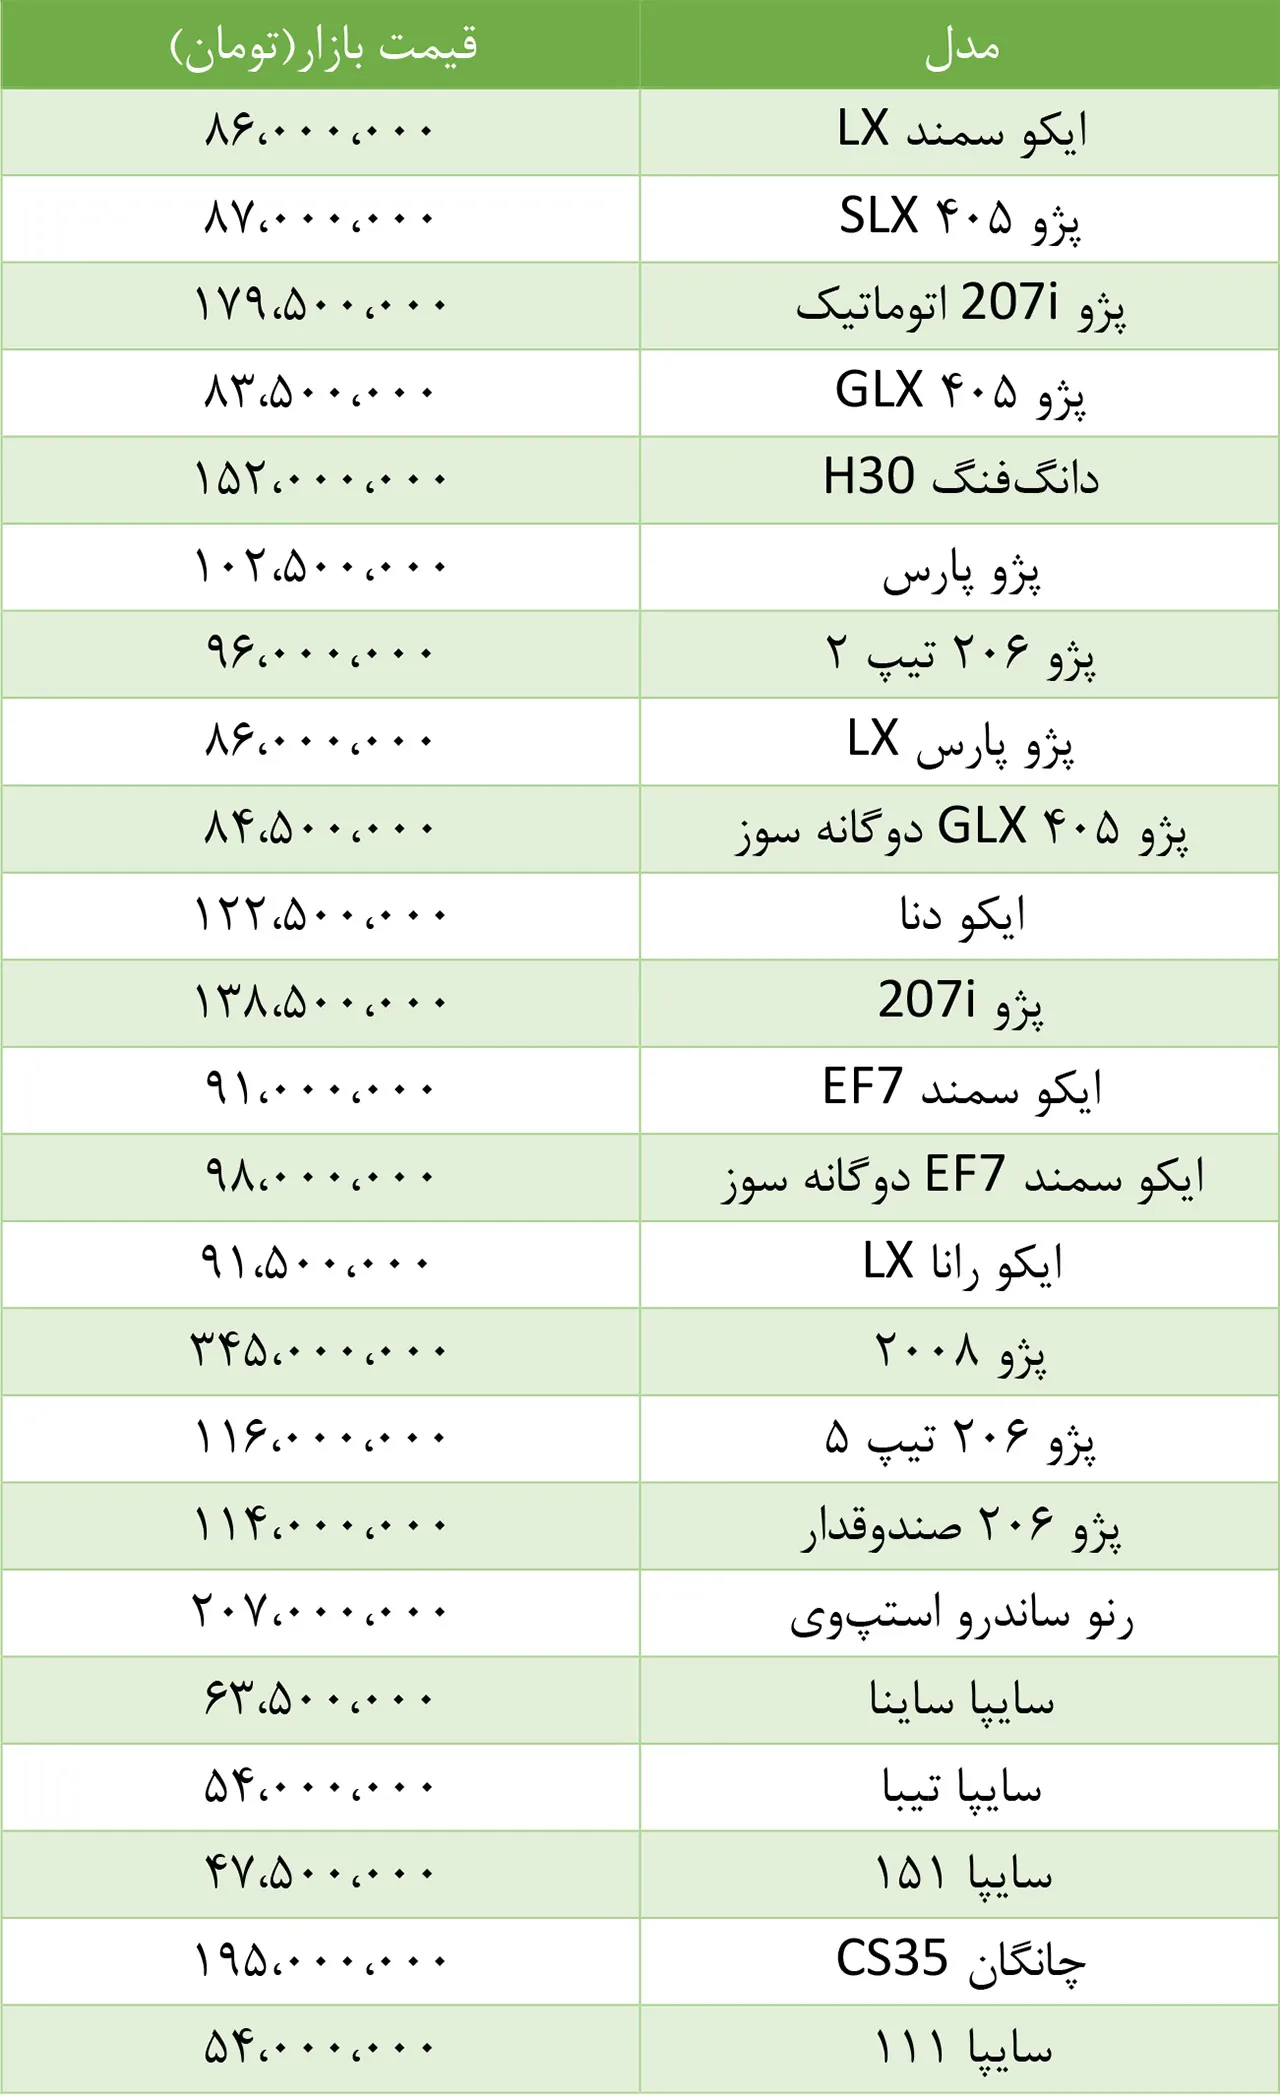 AutomobileFa New Iran Local Car Prices 9khordad